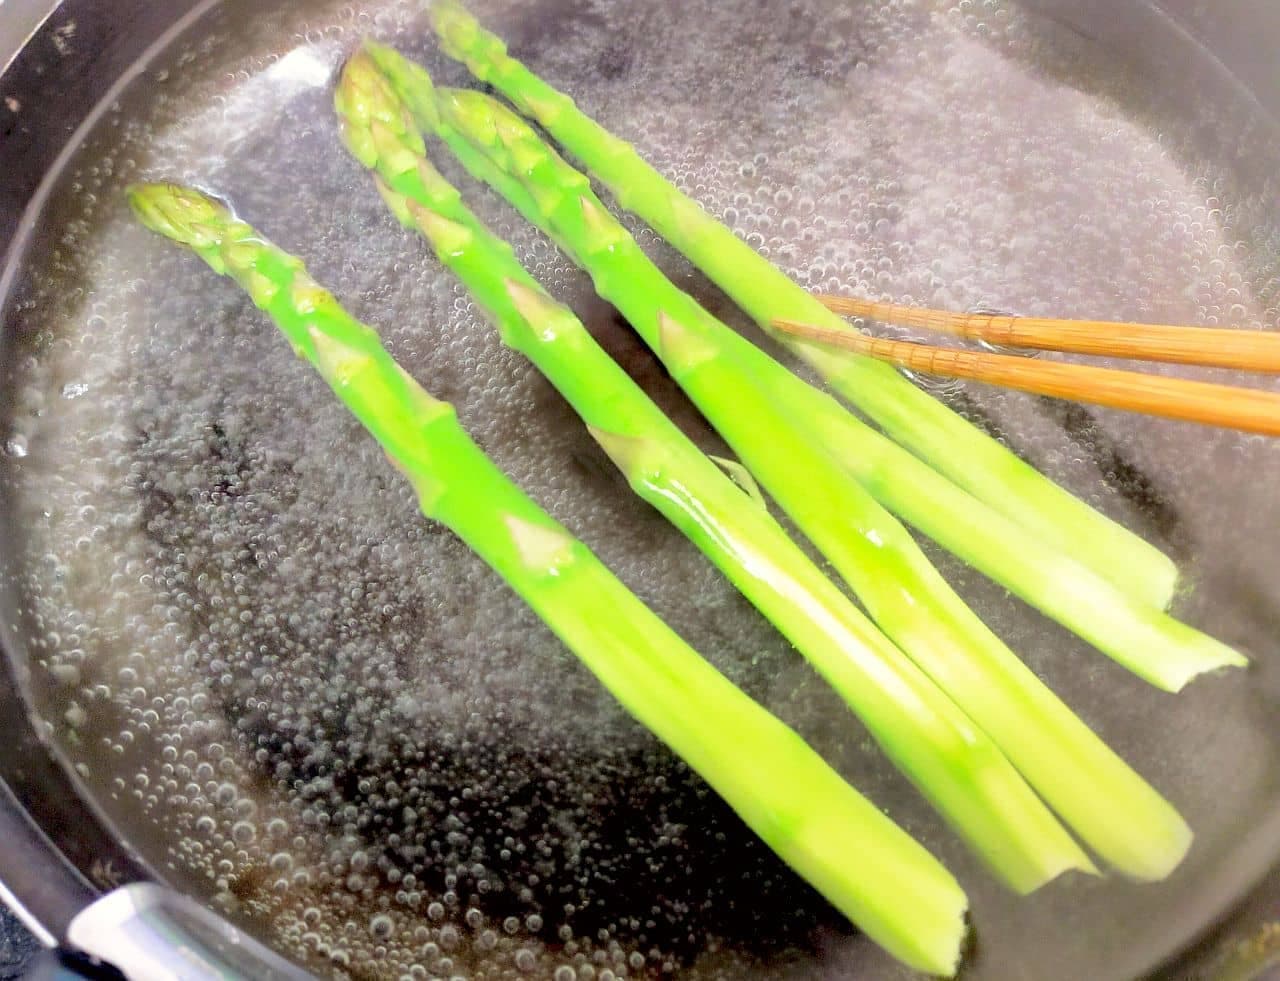 How to boil asparagus